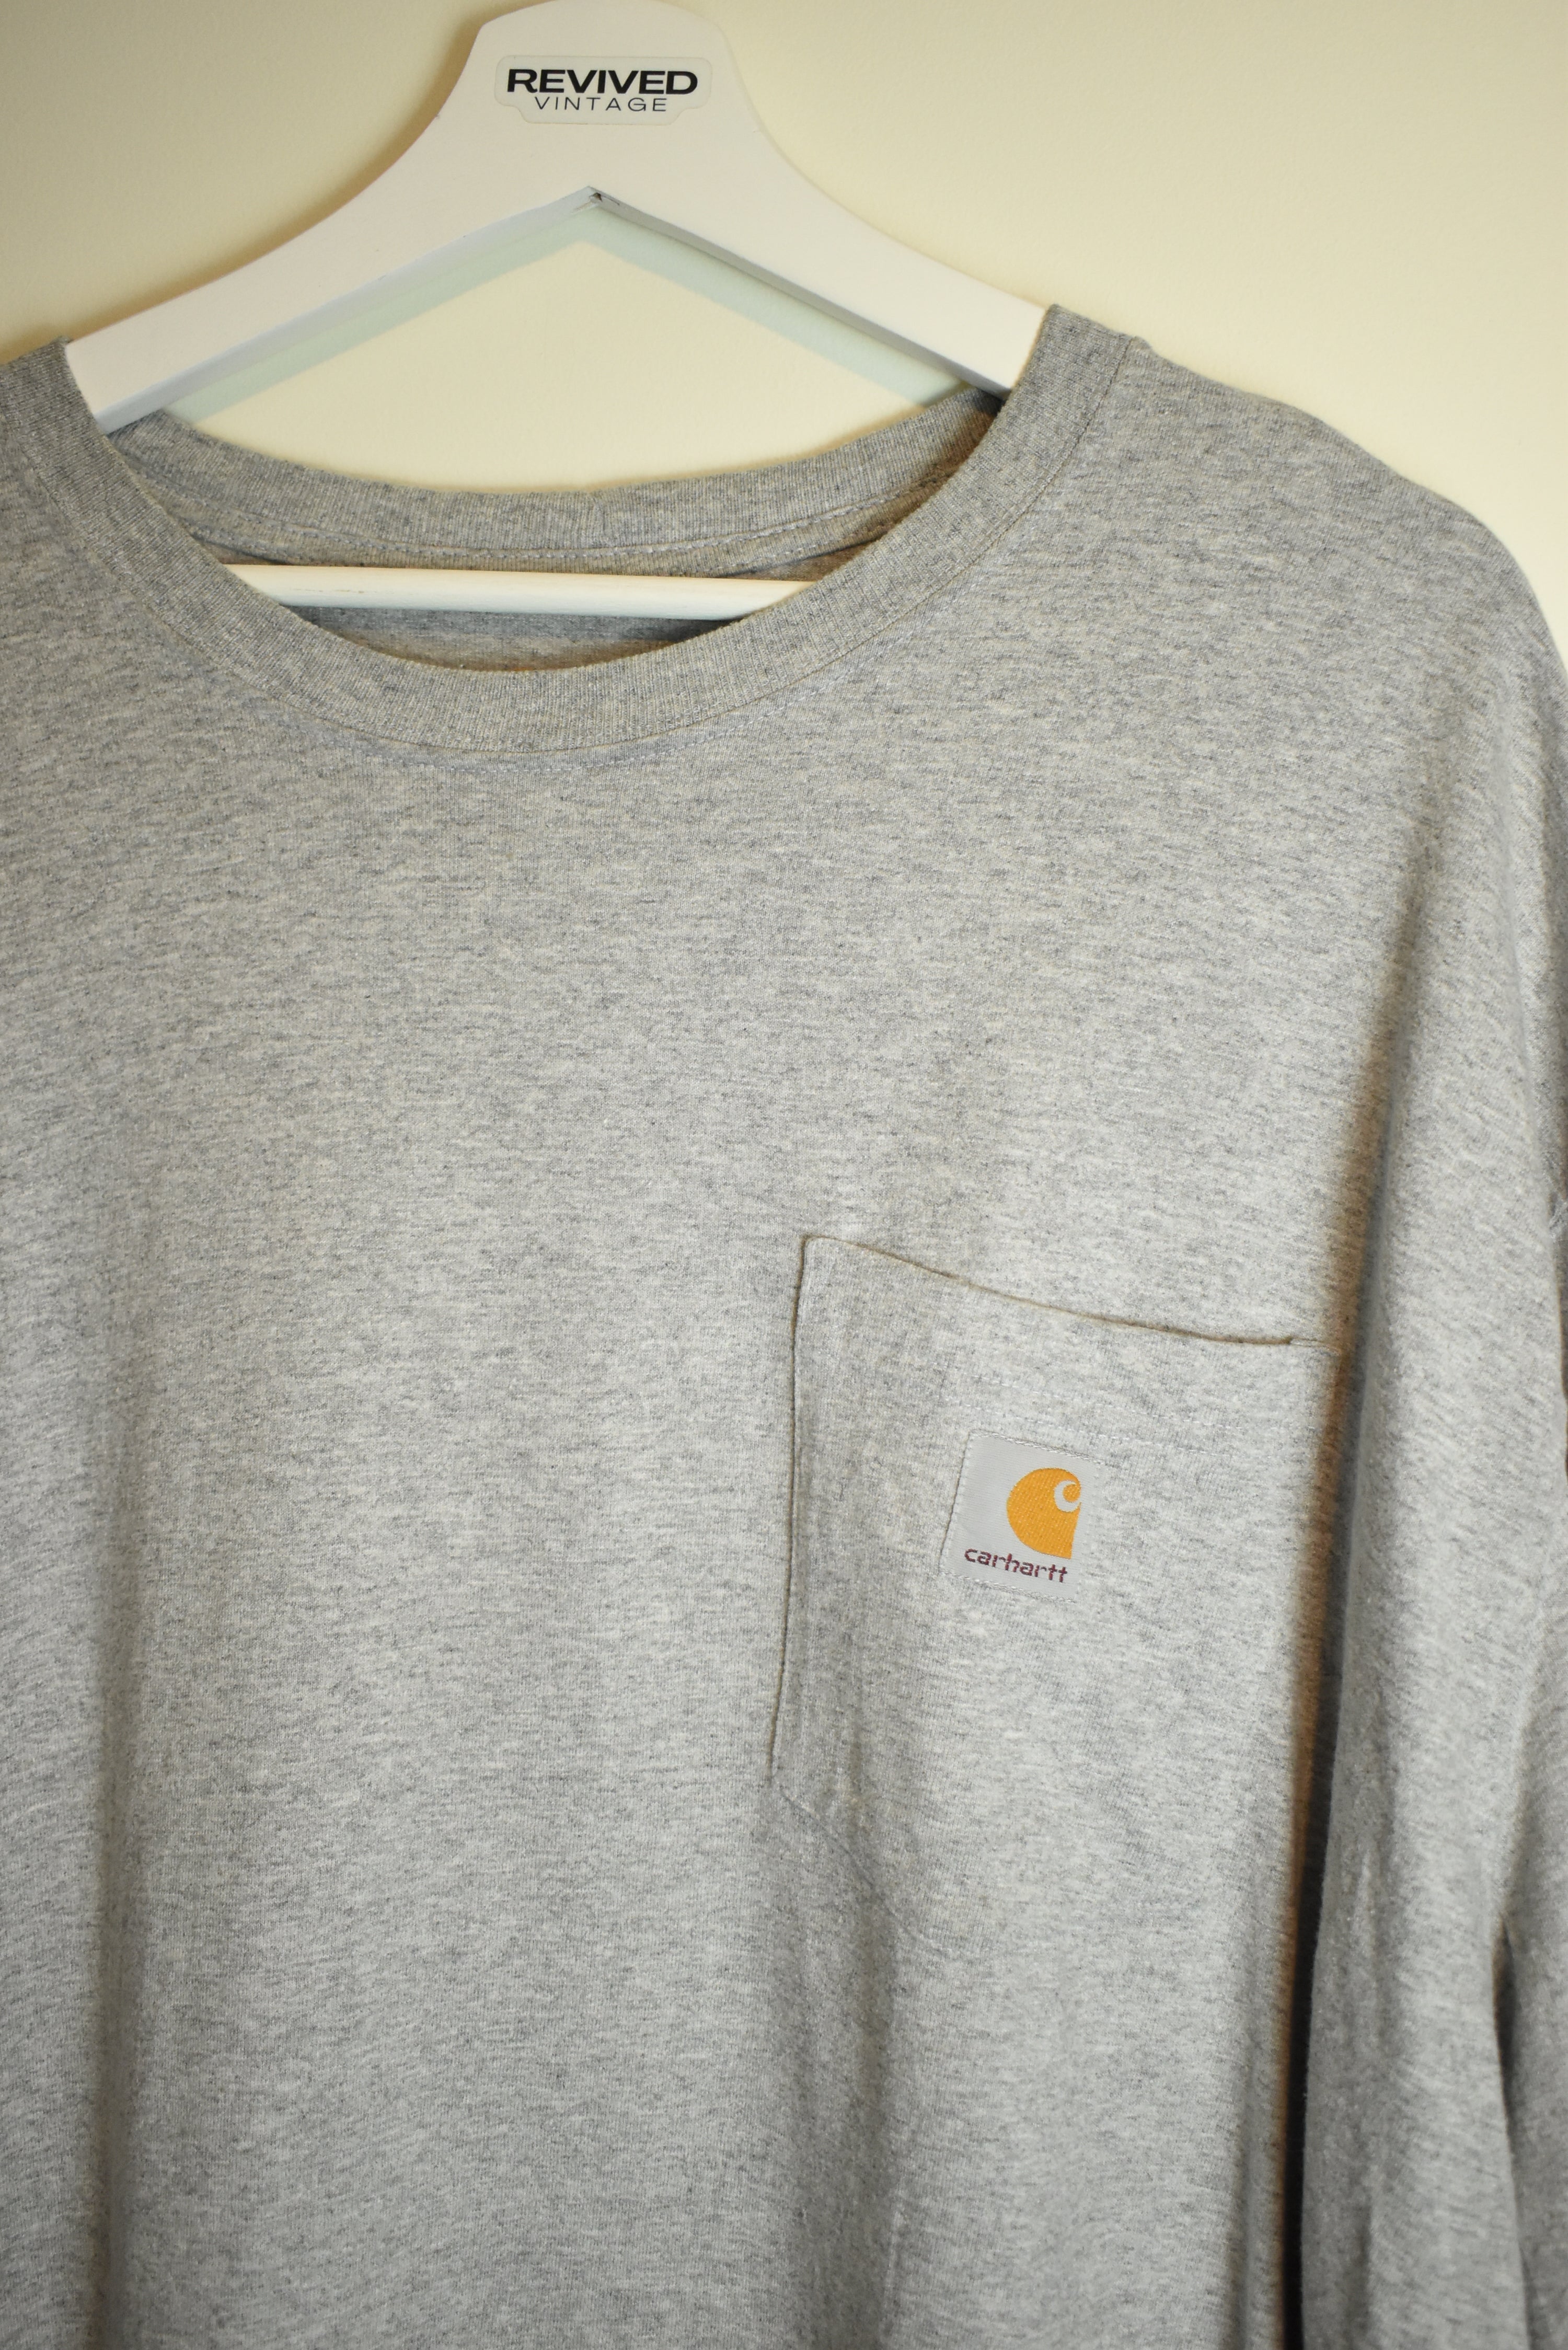 Vintage Carhartt Grey Long Sleeve Cotton Shirt Original Fit 3XL